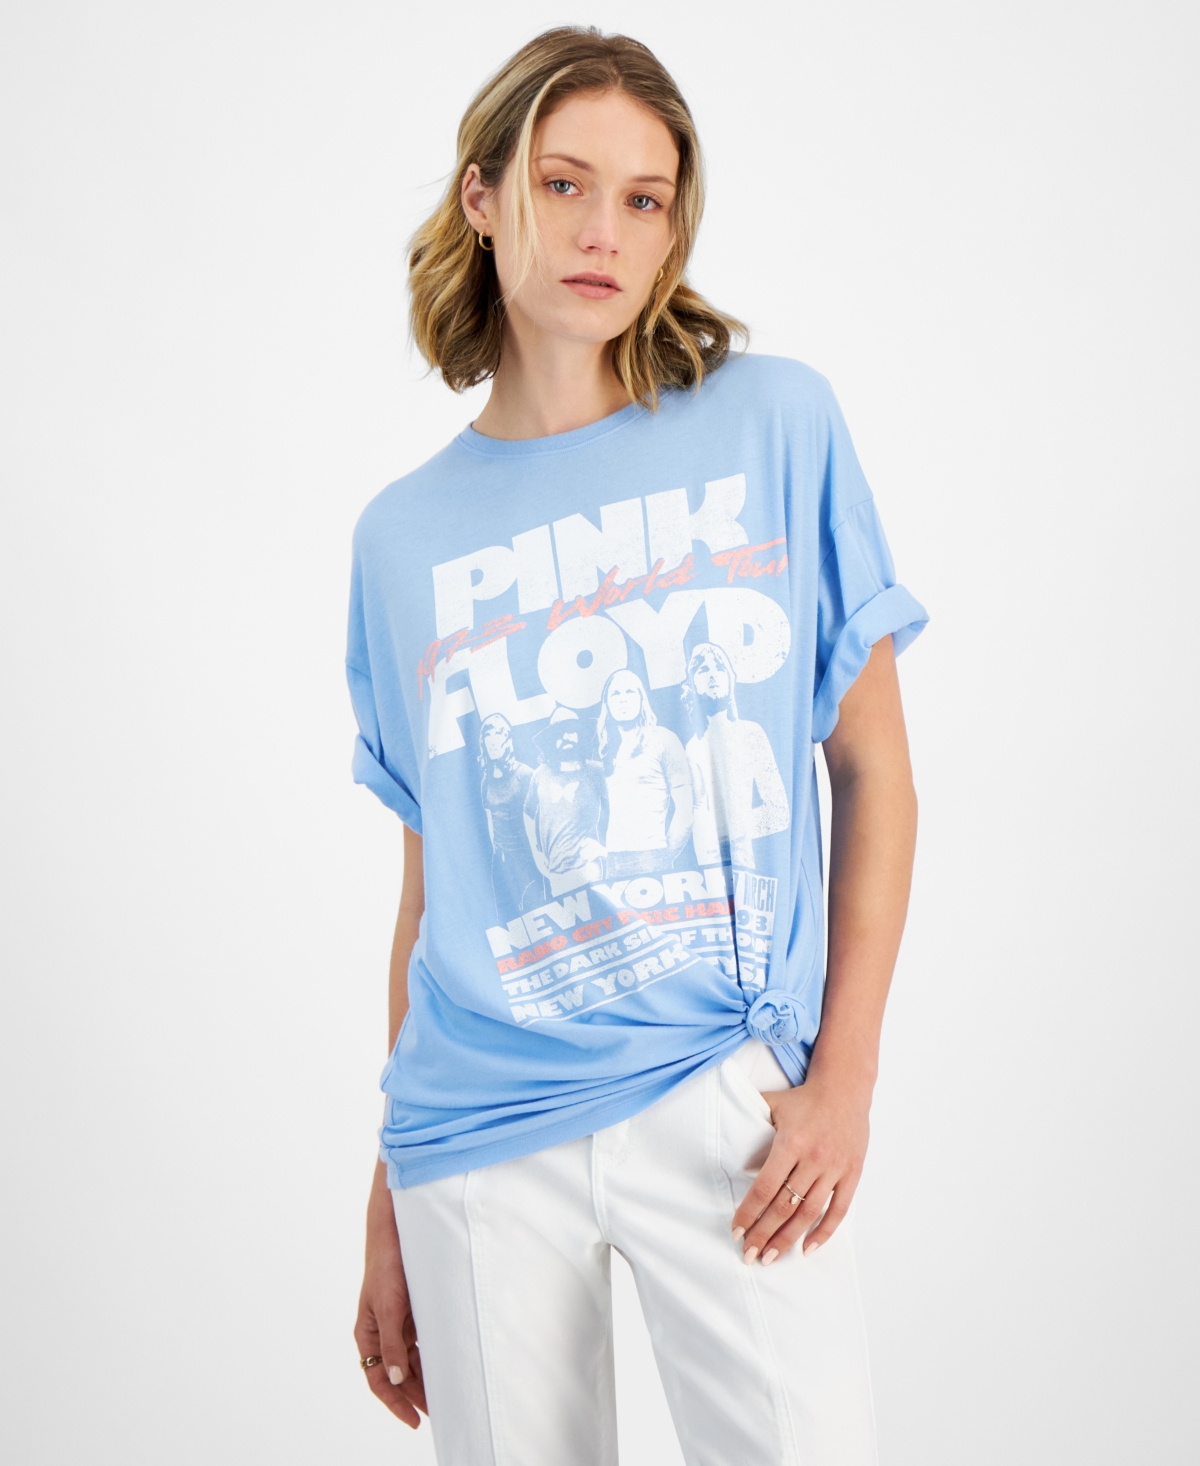 Juniors' Pink Floyd Graphic T-Shirt - Blue